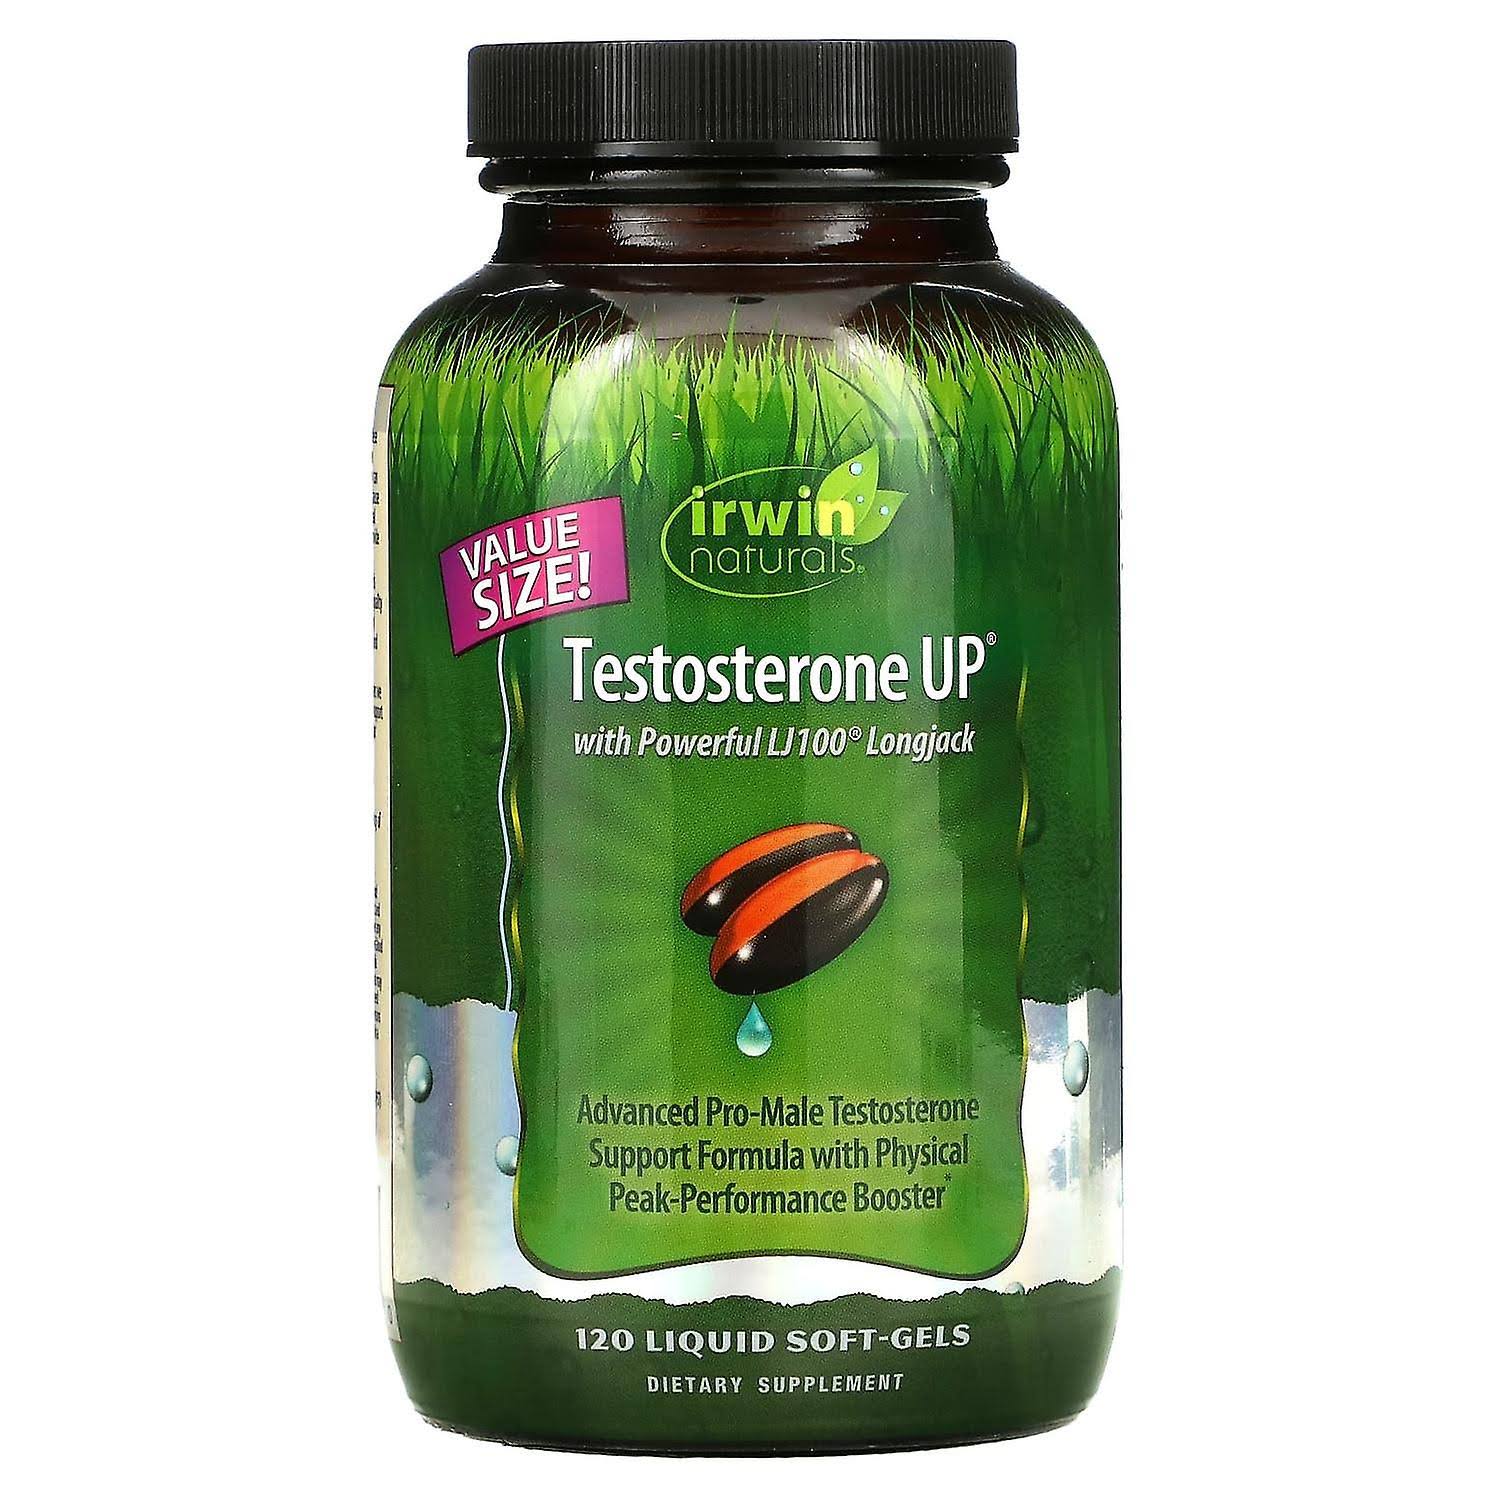 Irwin Naturals Testosterone up Men's Health Dietary Body Care Supplement - 120ct